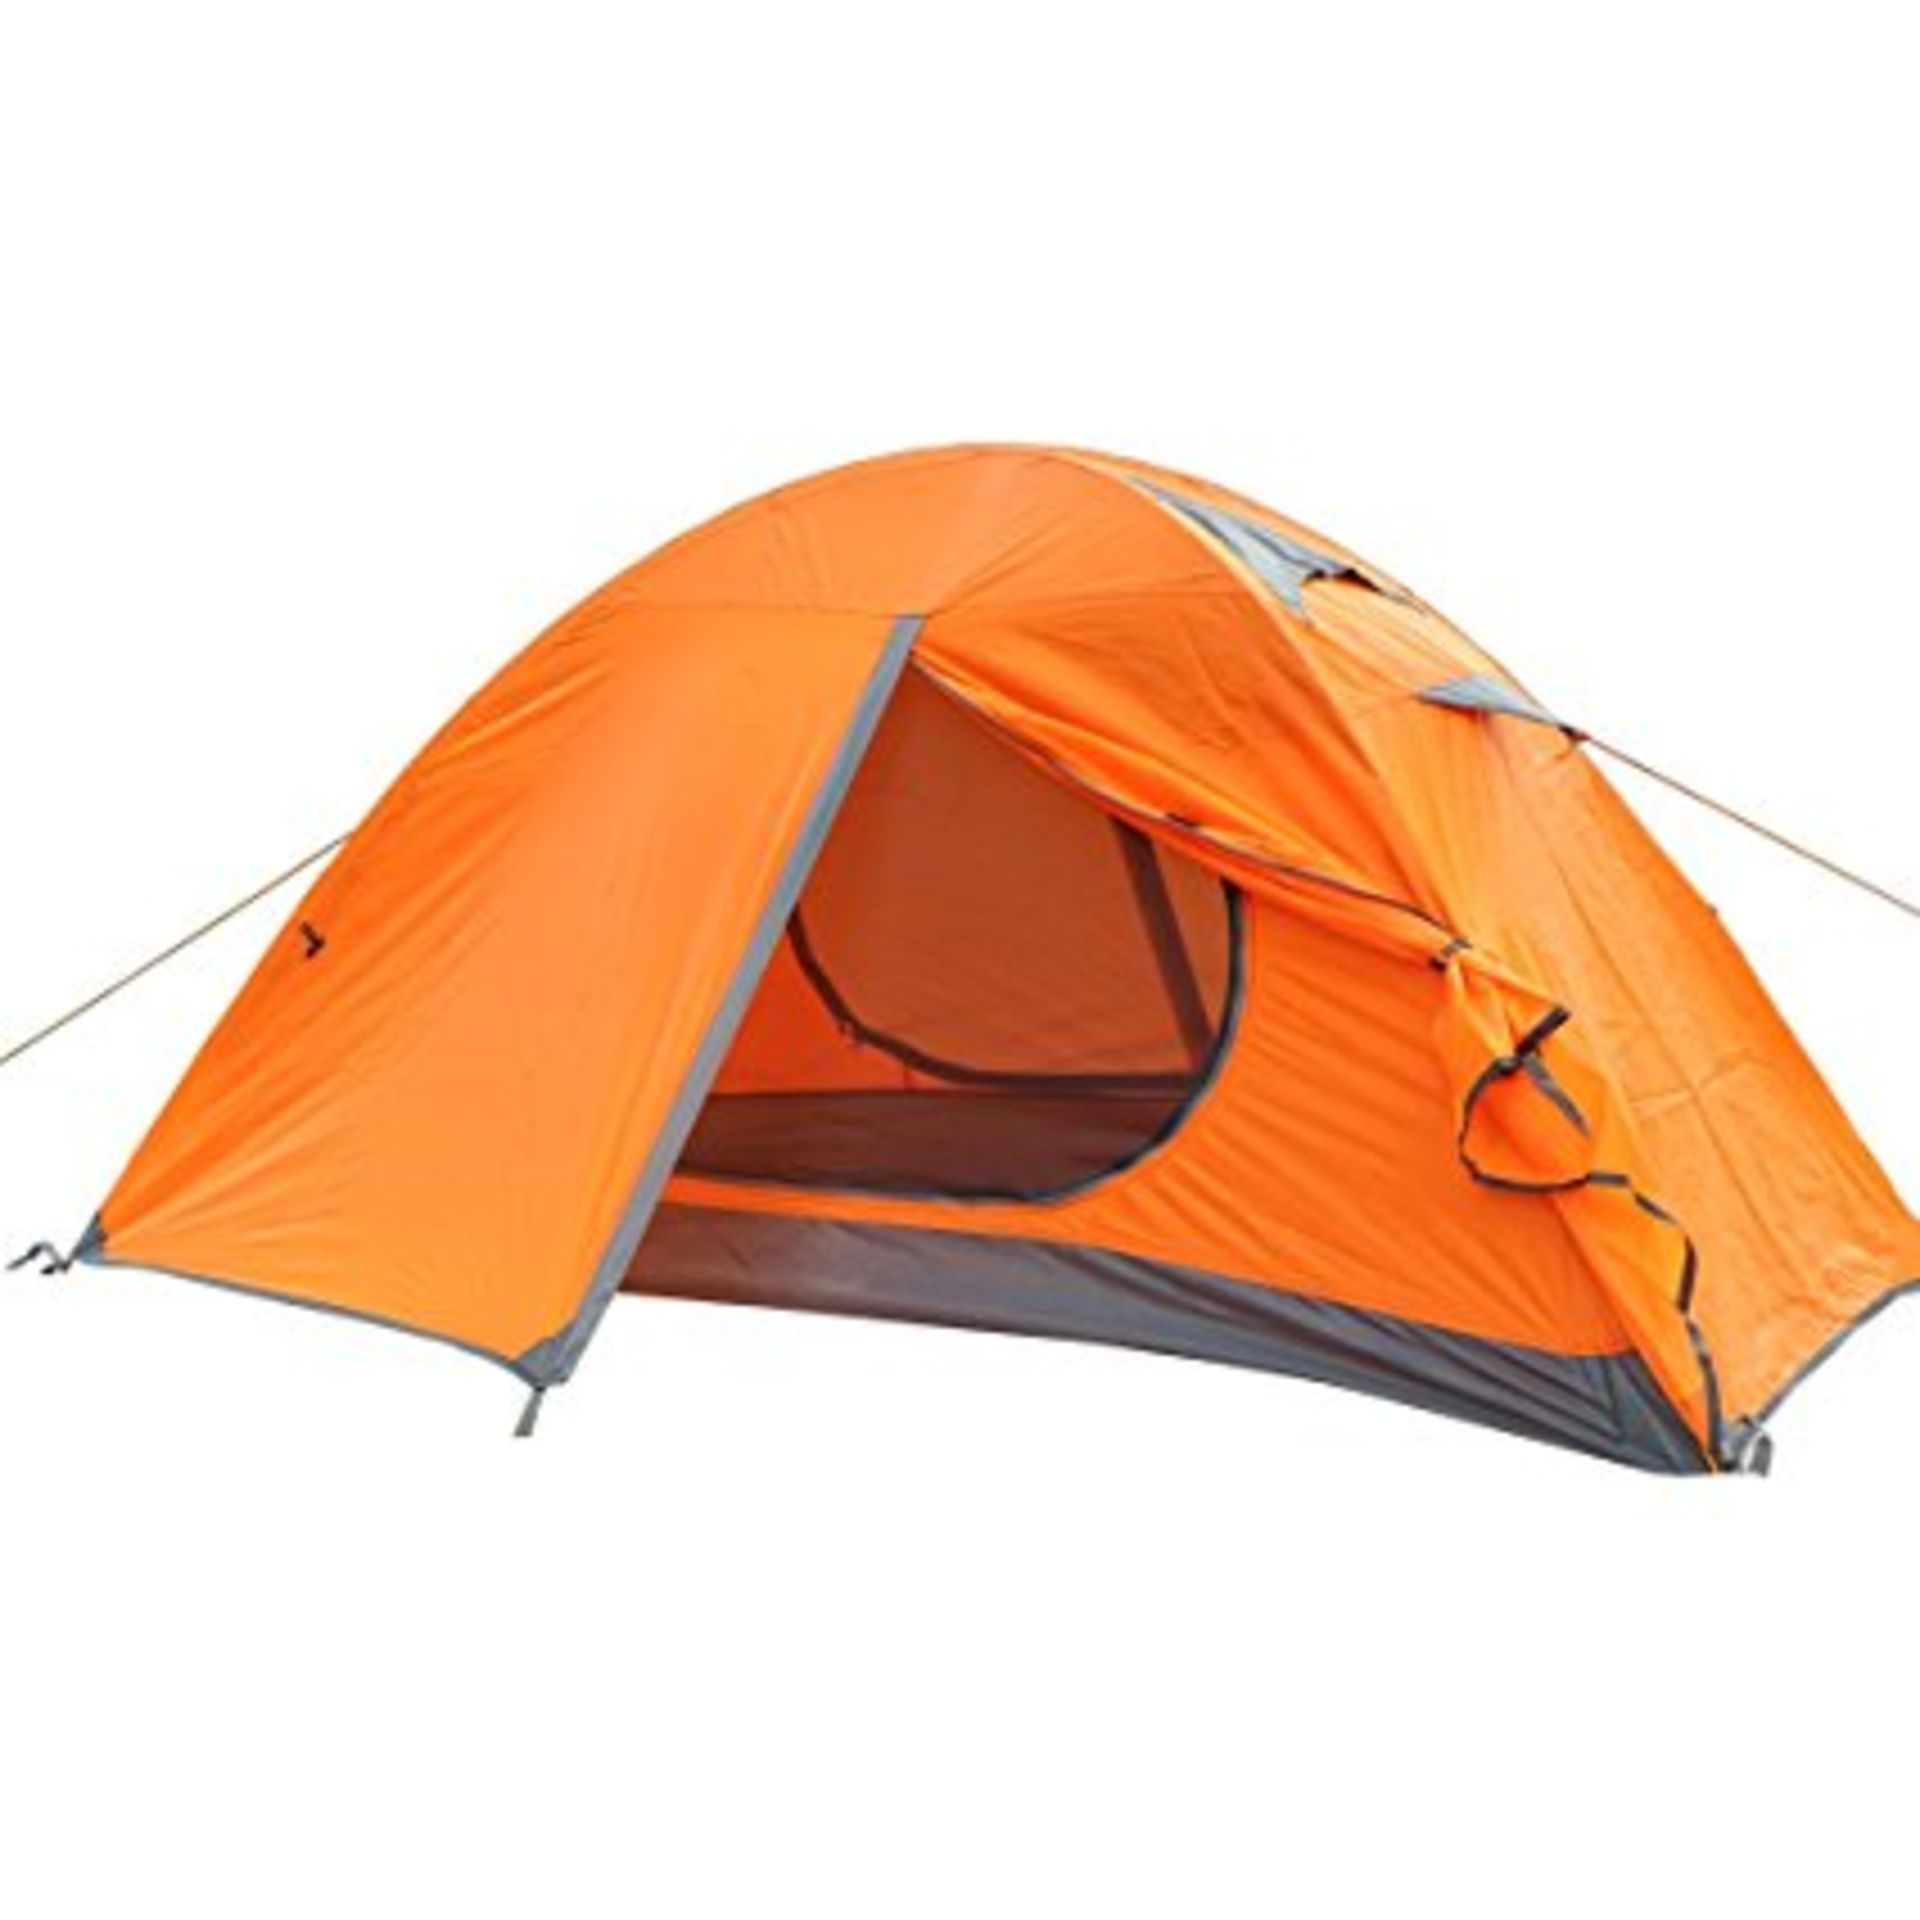 NatureFun 4-Season 1 Person Tent,Waterproof RRP £79.99